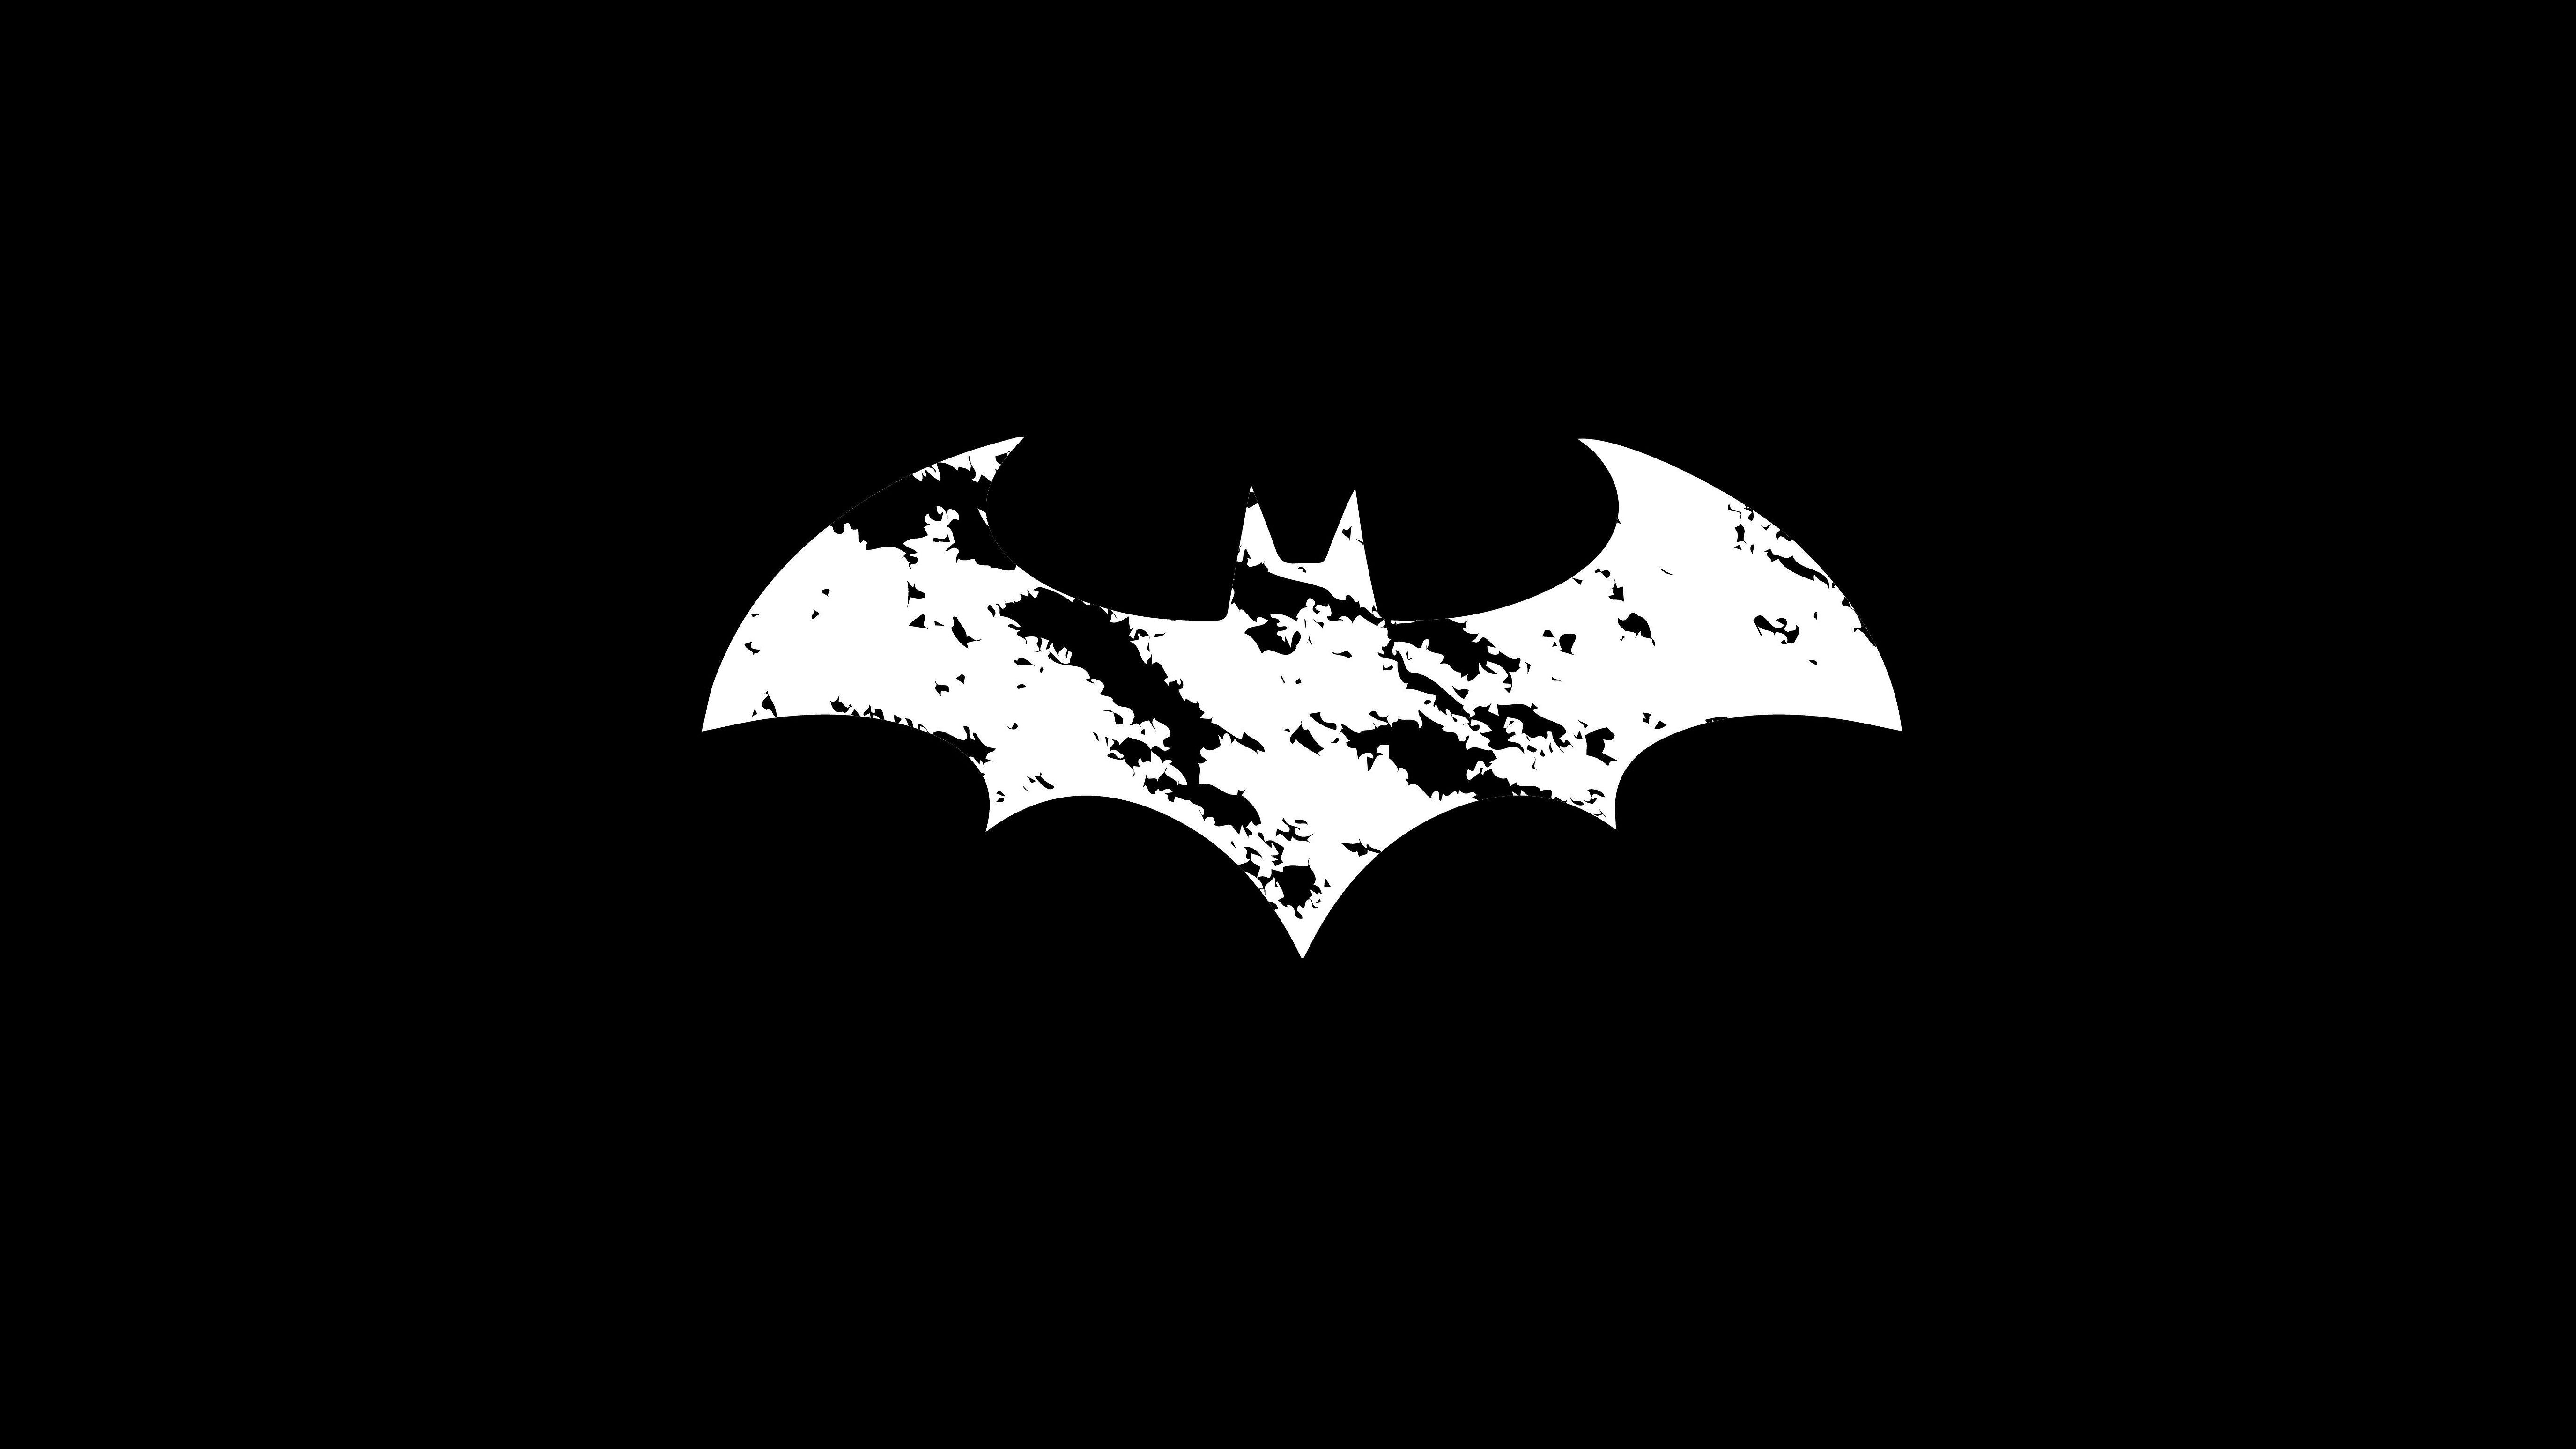 Batman 5k Retina Ultra HD Wallpapers and Backgrounds Image